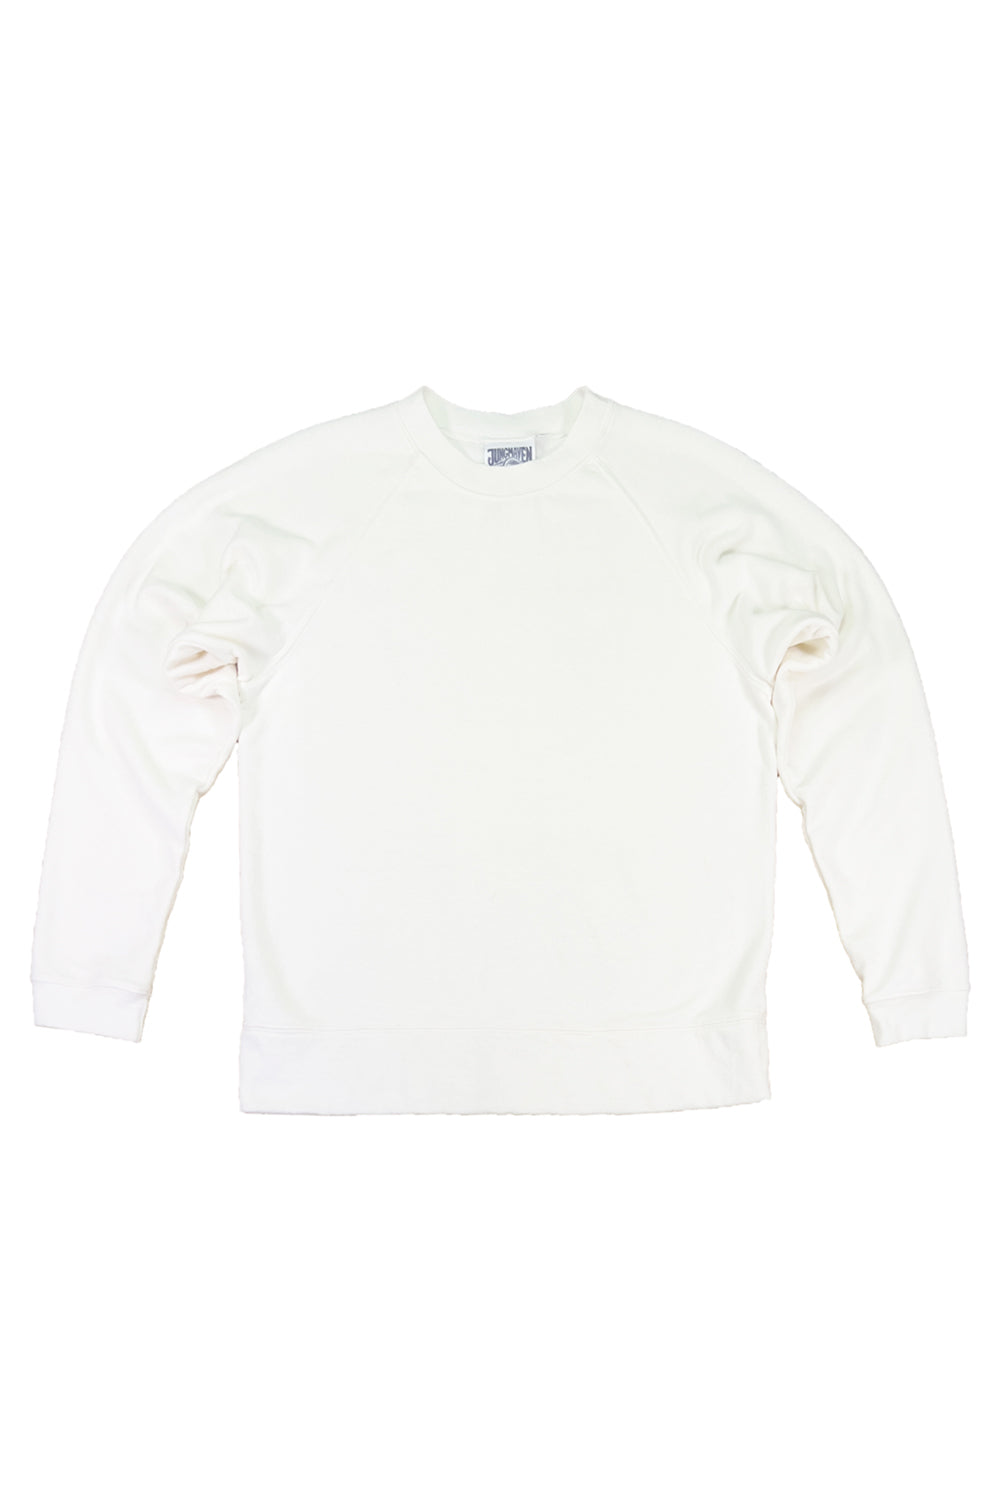 Sierra Raglan Sweatshirt | Jungmaven Hemp Clothing & Accessories / Color: Washed White